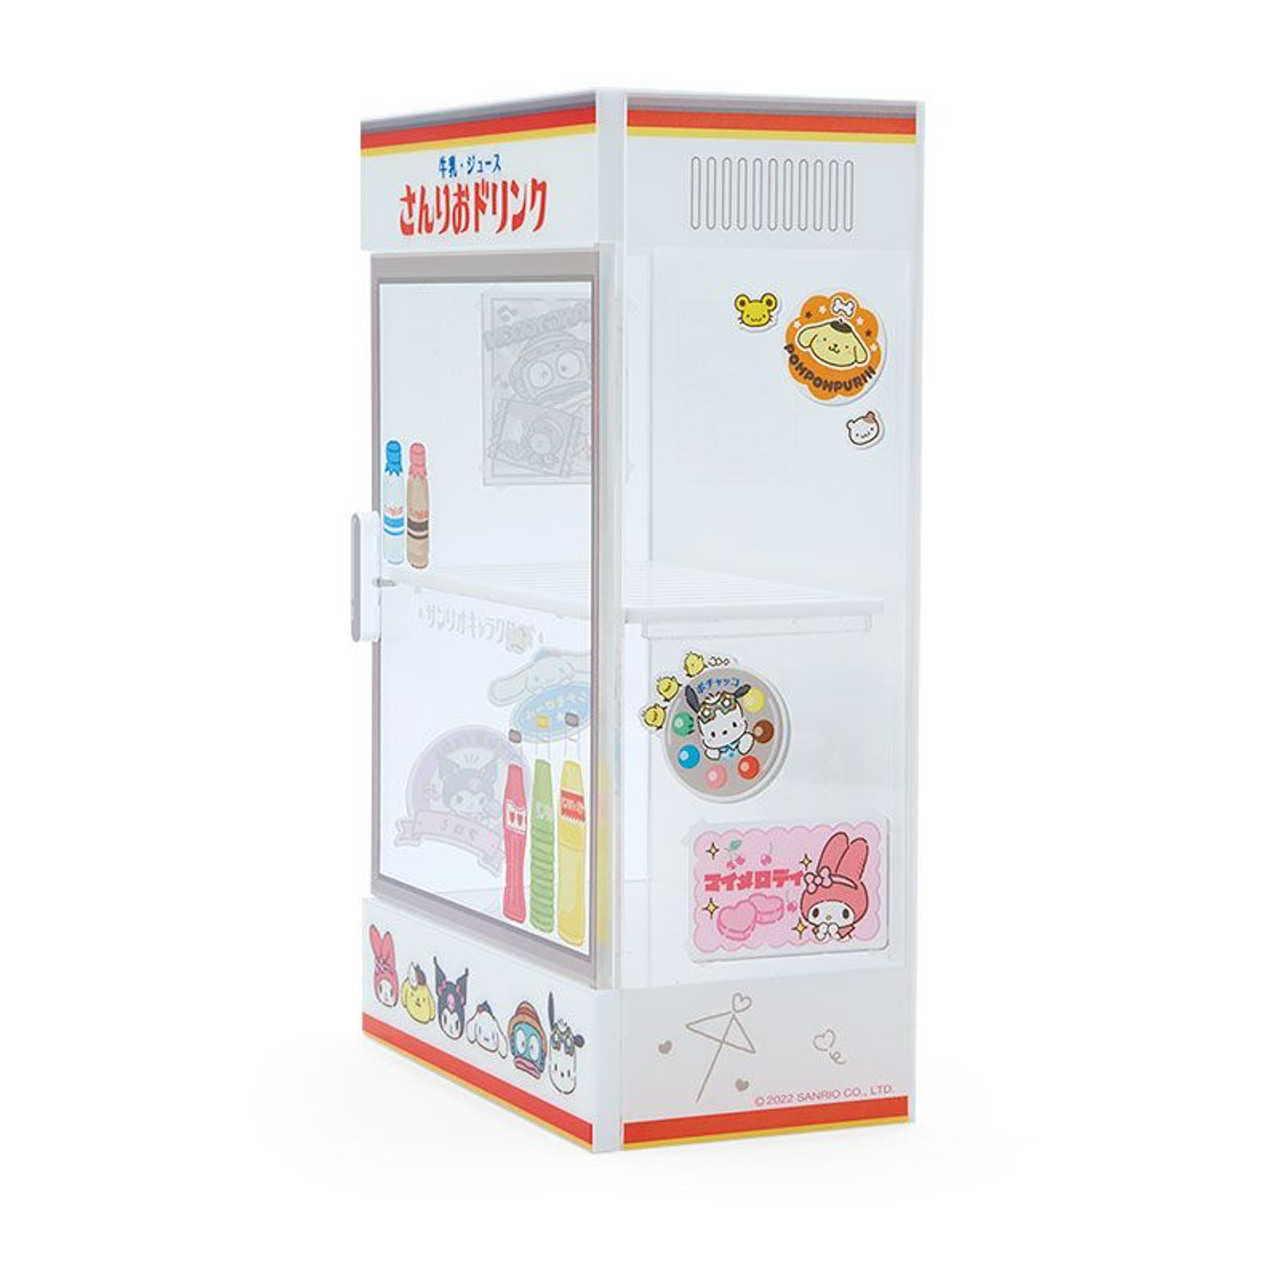 Sanrio Hello Kitty Mini Refrigerator Playset